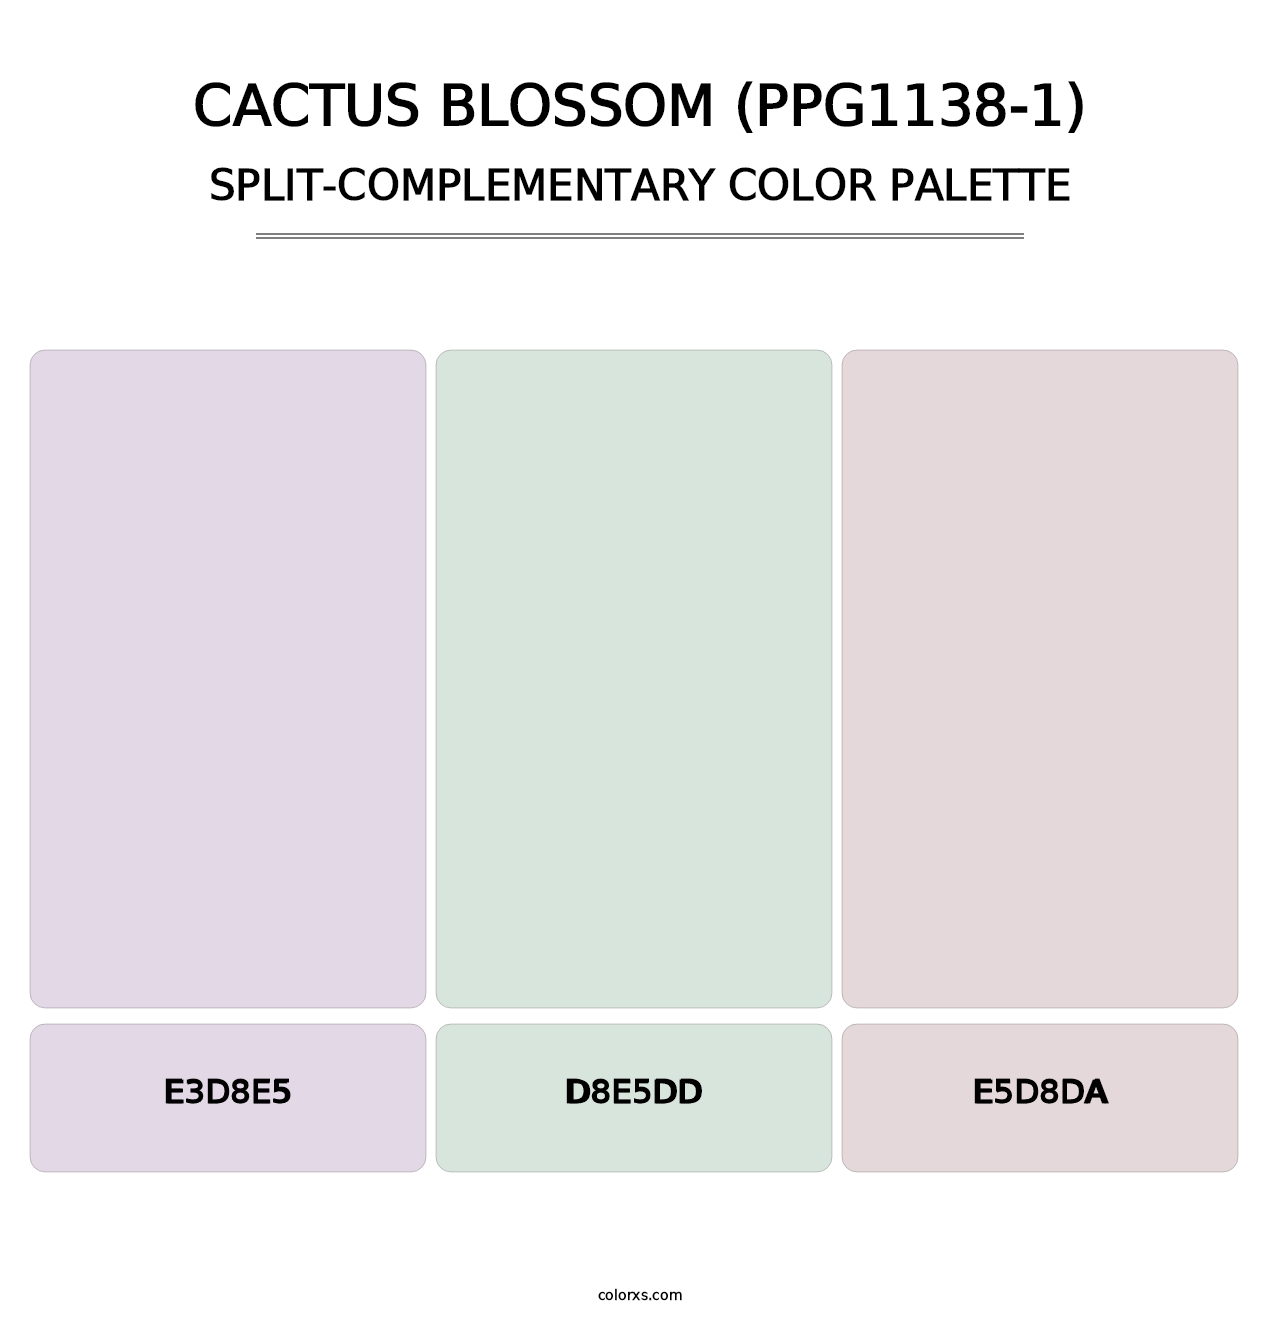 Cactus Blossom (PPG1138-1) - Split-Complementary Color Palette